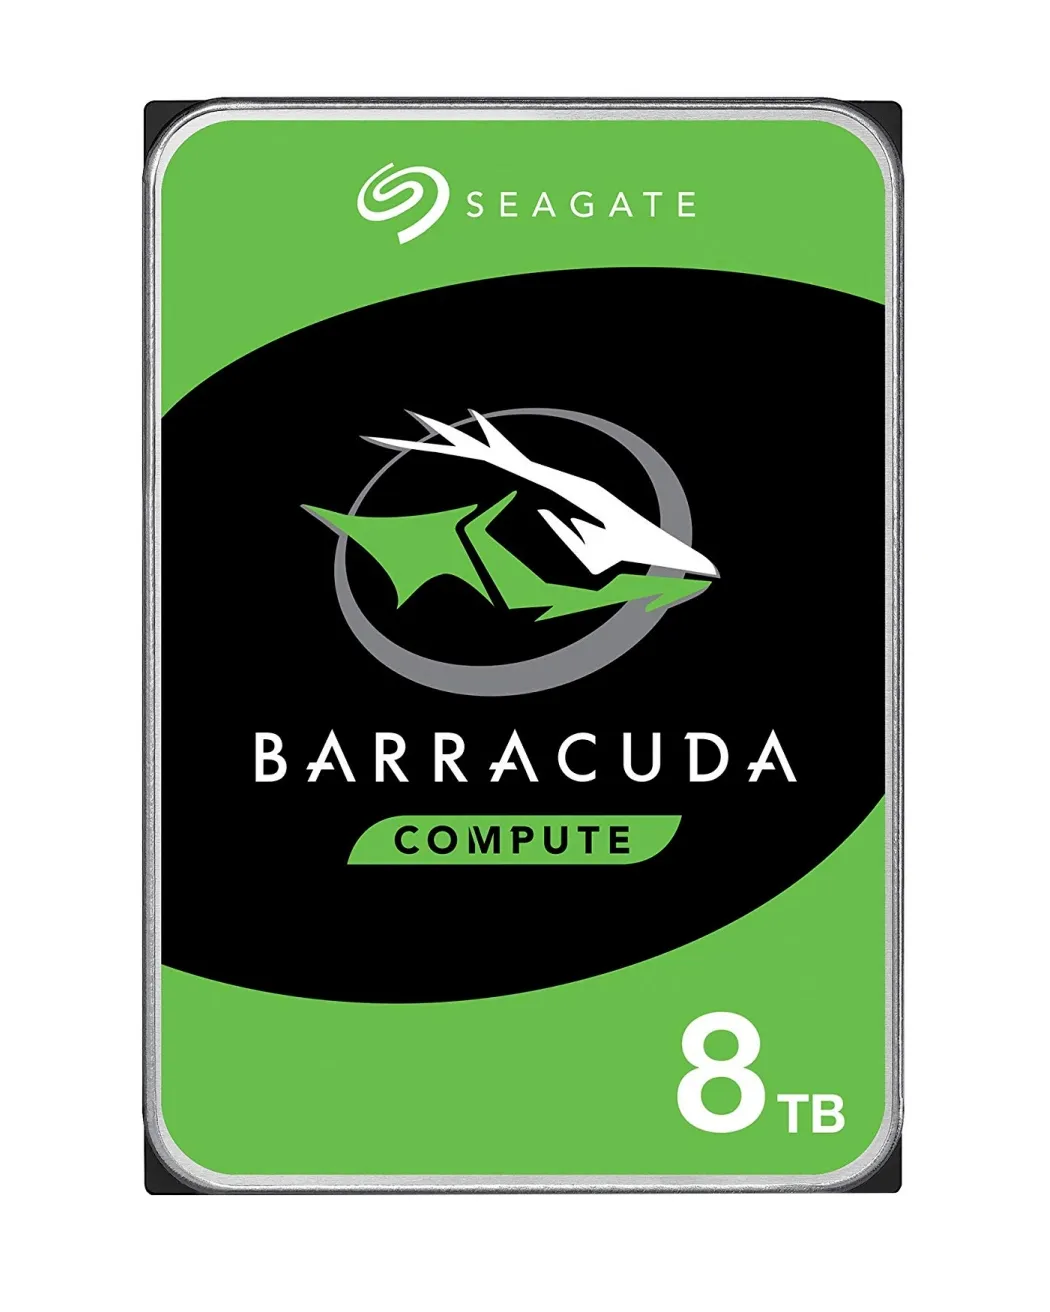 Vente SEAGATE Desktop Barracuda 5400 8To HDD 5400rpm SATA Seagate au meilleur prix - visuel 2